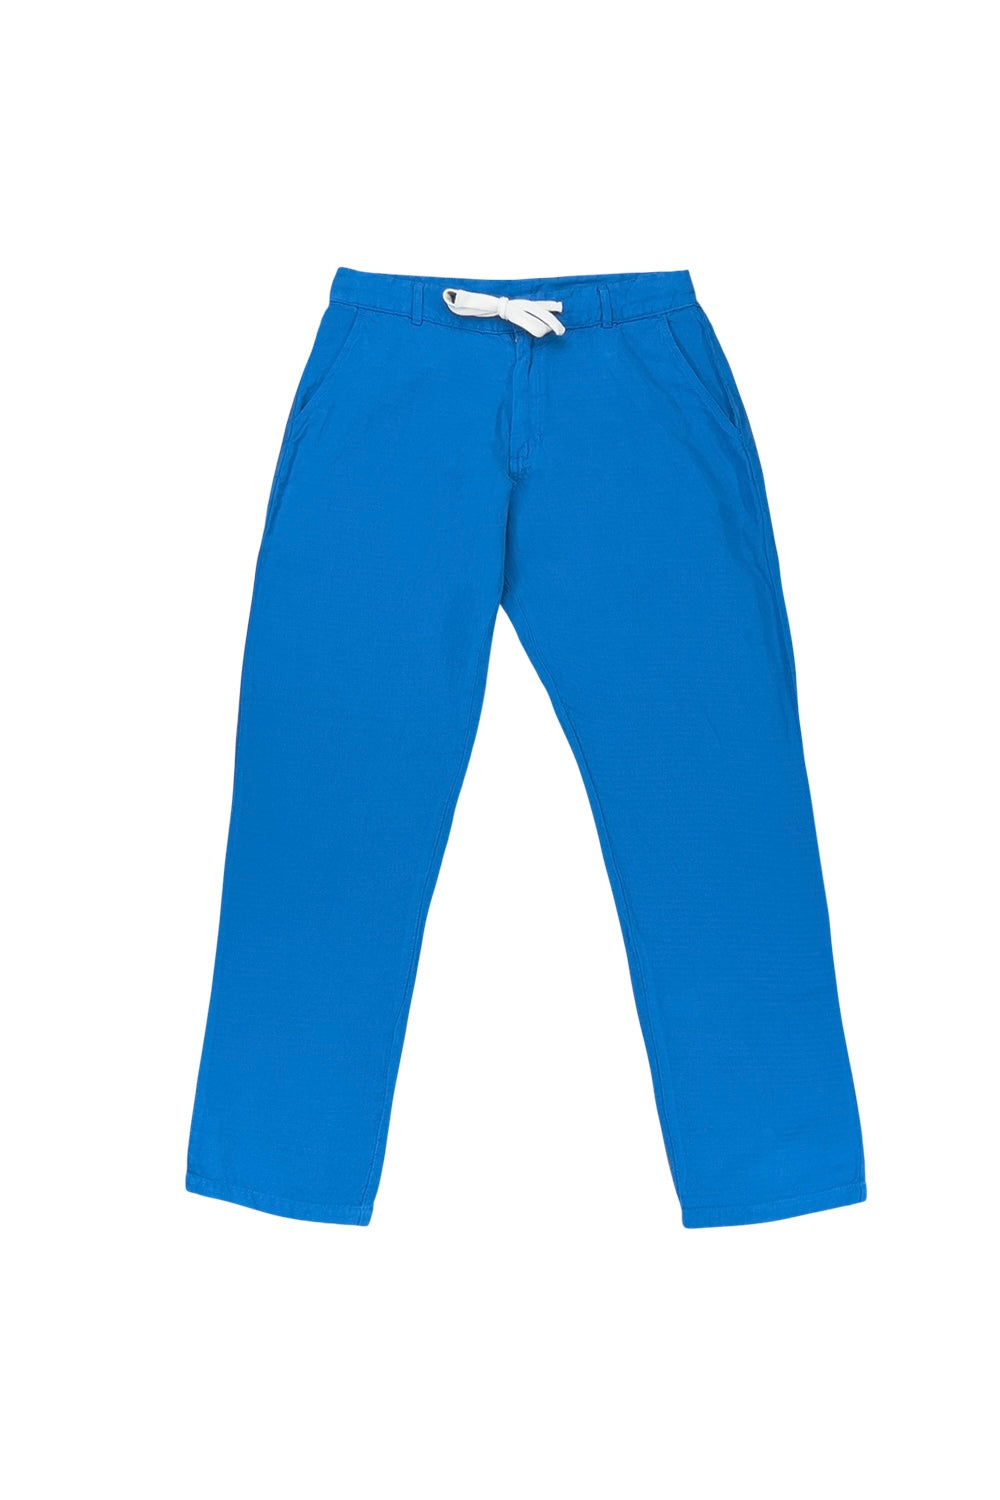 Traverse Pant | Jungmaven Hemp Clothing & Accessories / Color: Galaxy Blue